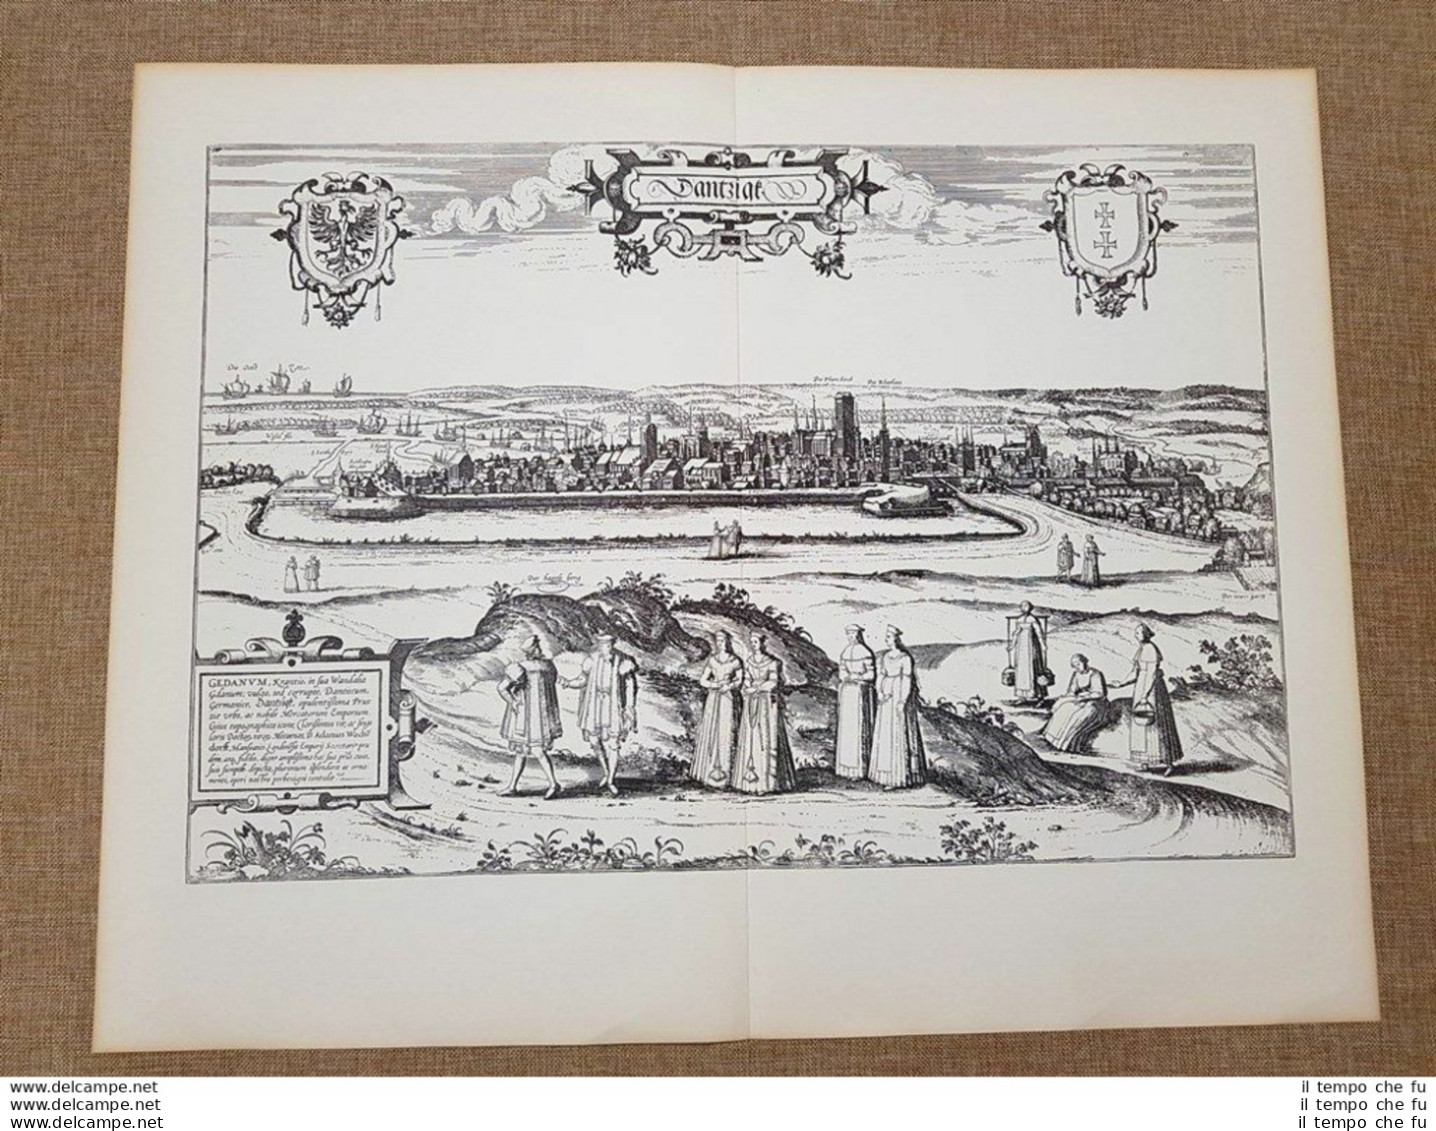 Veduta Della Città Gdansk O Danzica Polonia Anno 1576 Braun E Hogenberg Ristampa - Mapas Geográficas